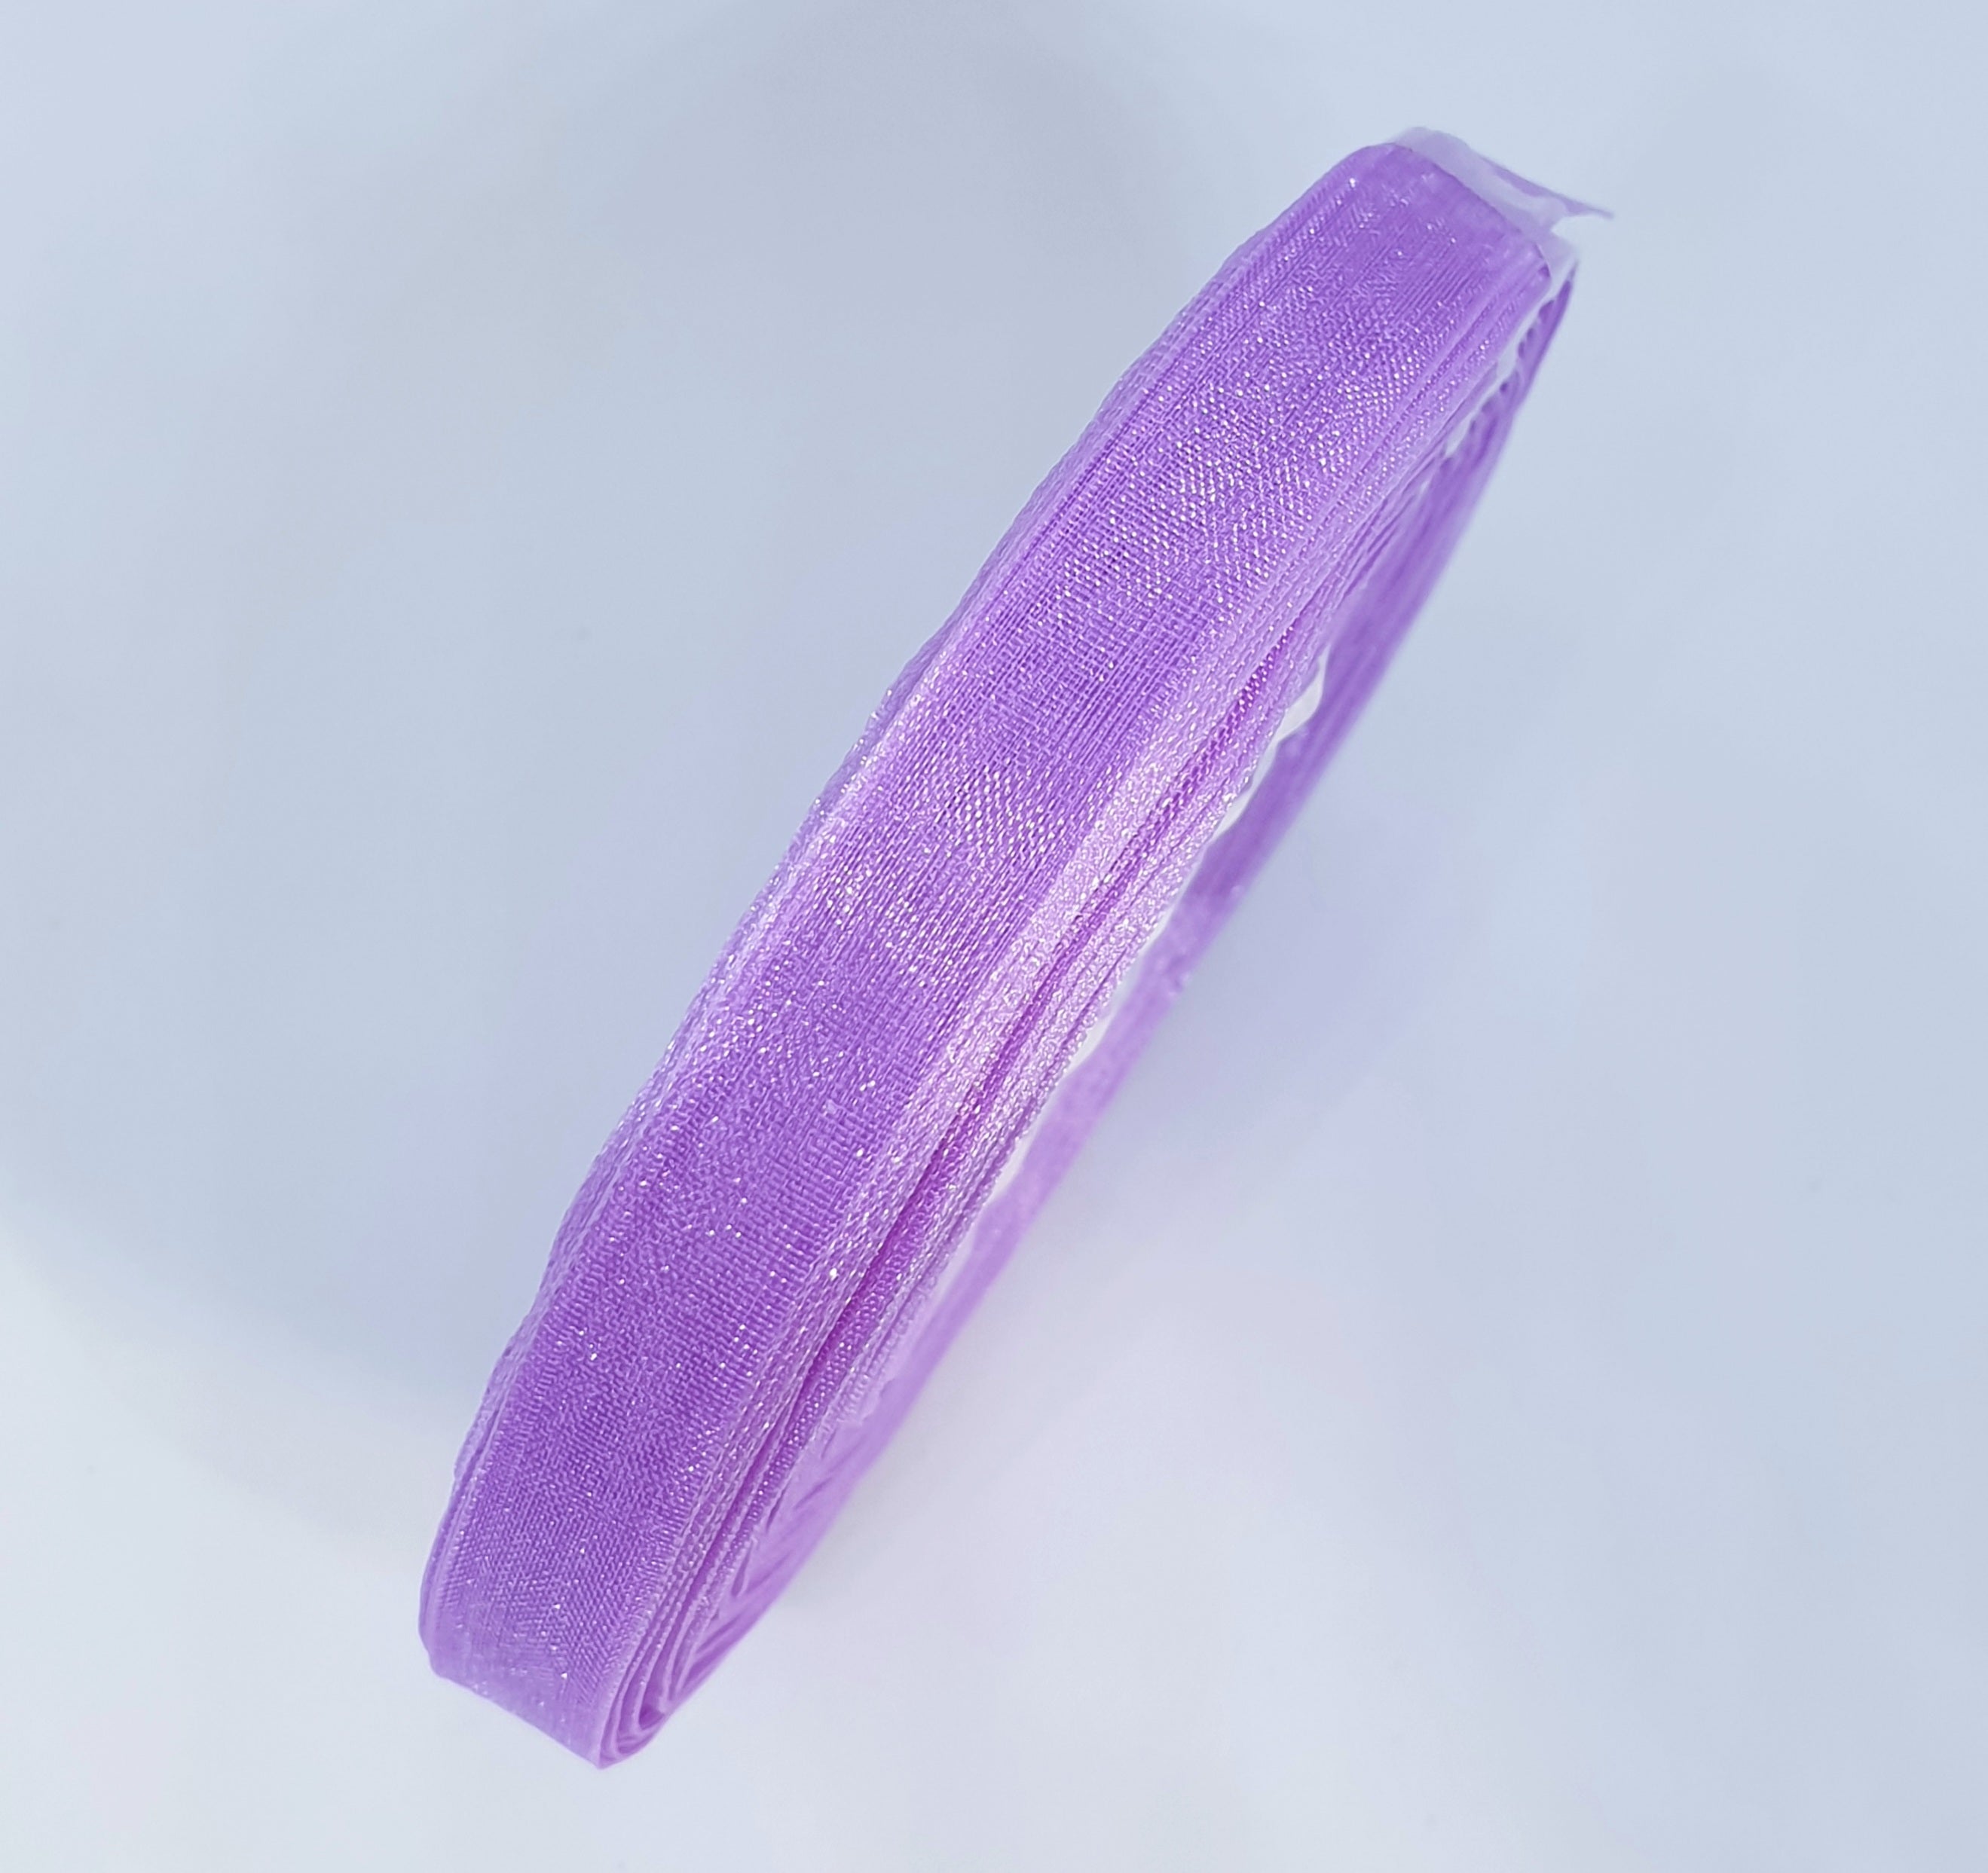 MajorCrafts 10mm 45metres Lilac Purple Sheer Organza Fabric Ribbon Roll K42